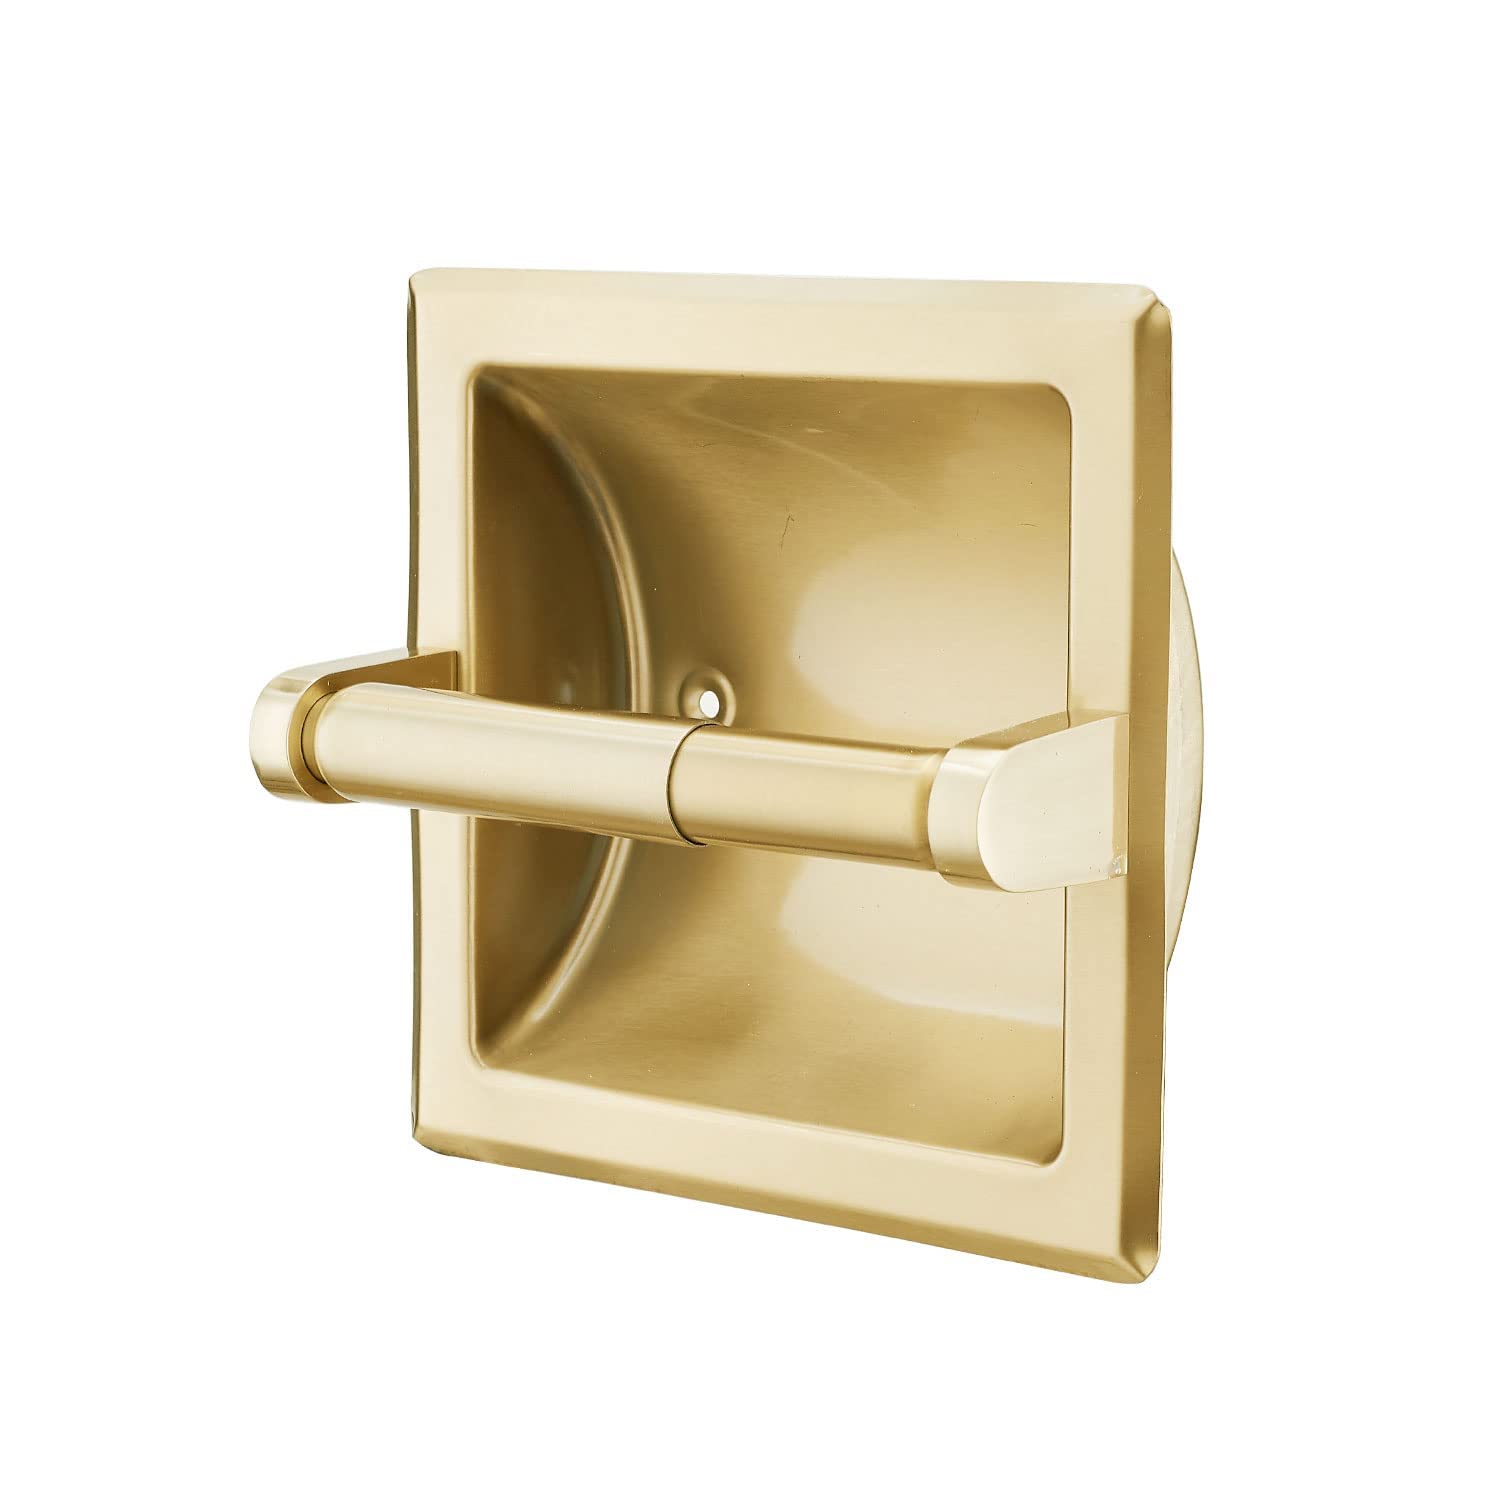 Top Taste Toilet Paper Holder Wall Mount, in Wall Toilet Paper Holder gold, Brushed gold Toilet Paper Holder Stainless Steel Rec